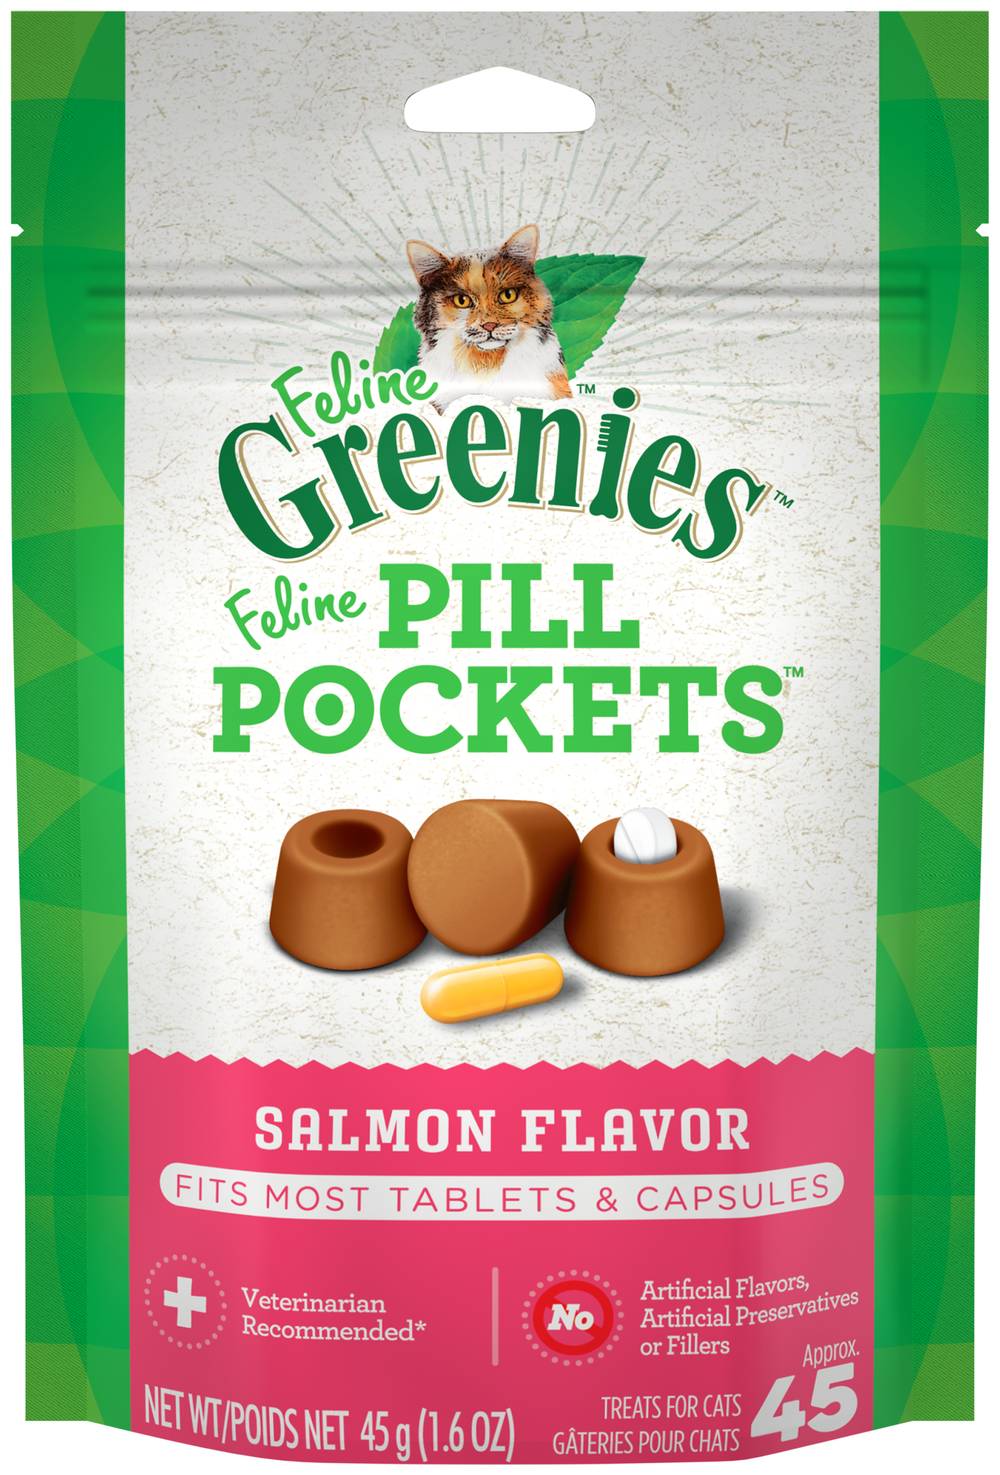 Greenies Natural Dental Care Feline Pill Pockets Cat Treats (salmon)